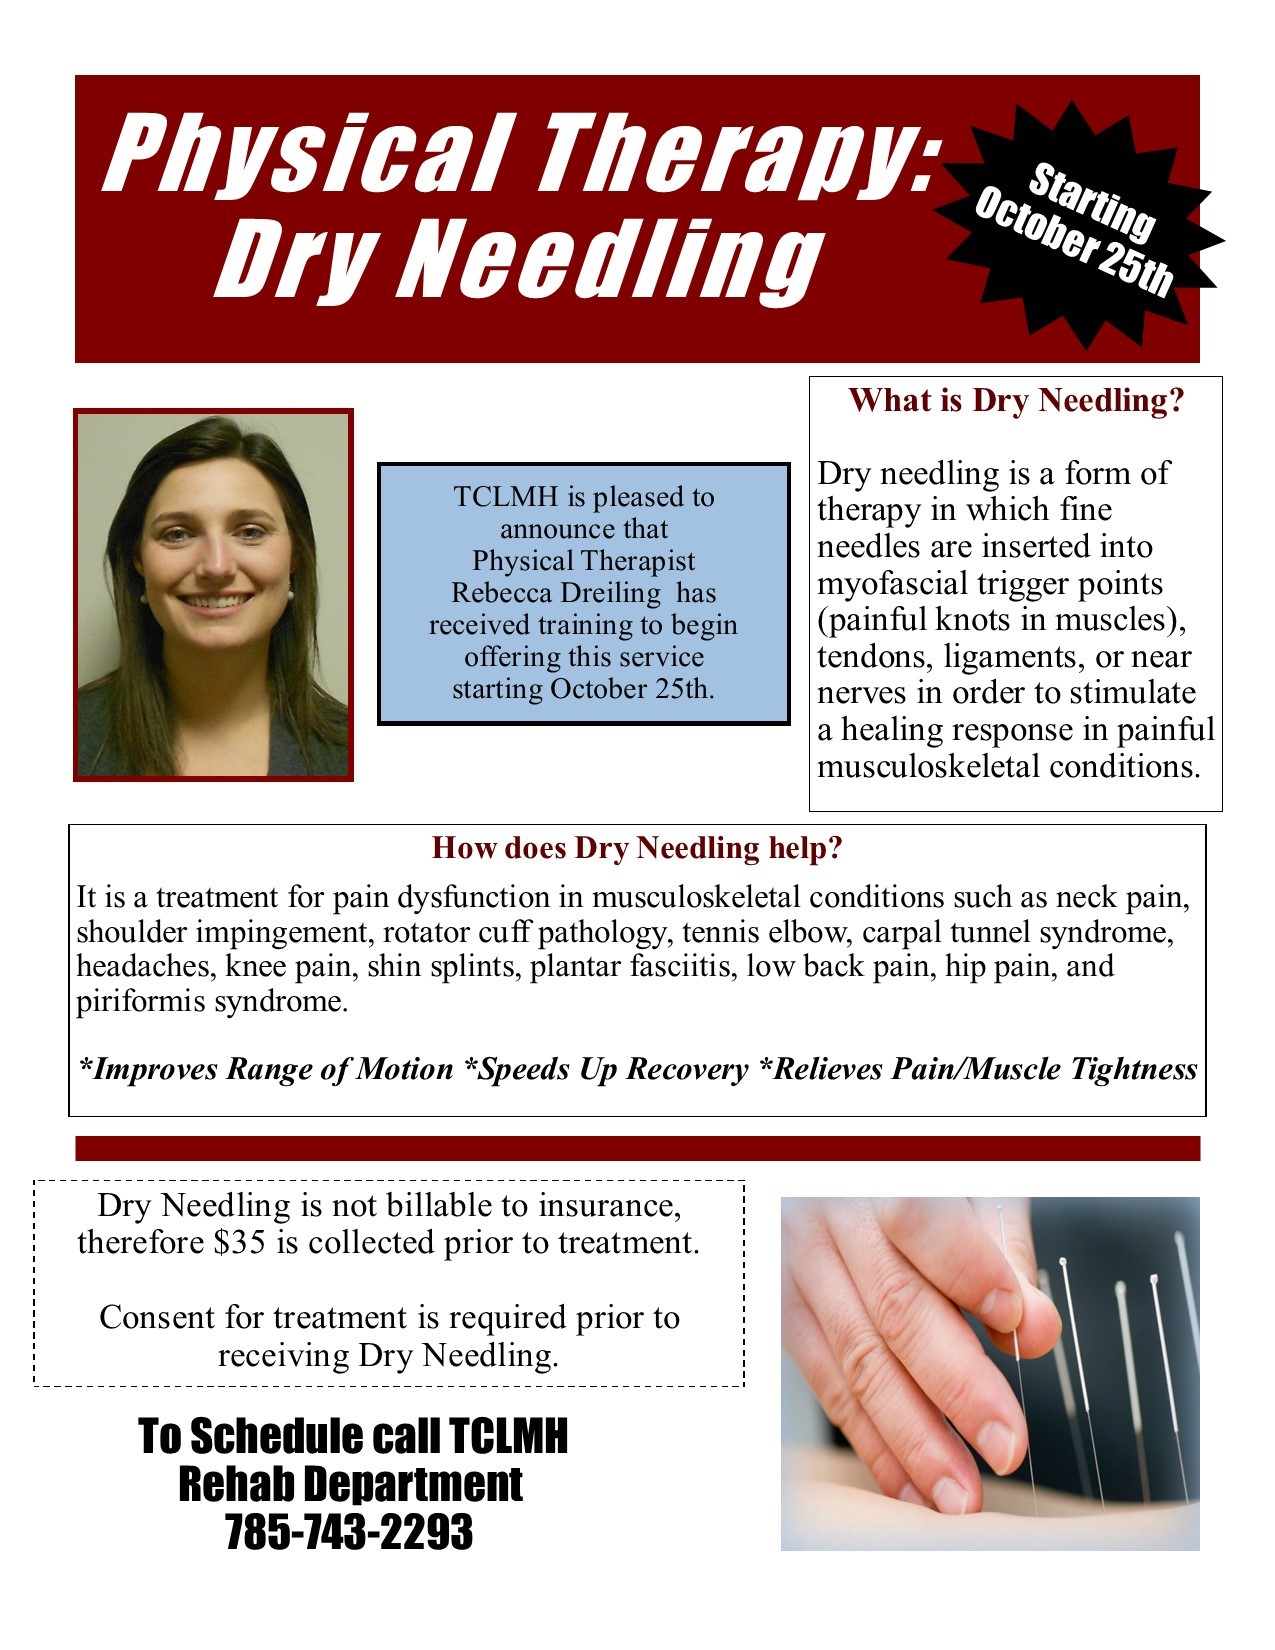 Dry needling